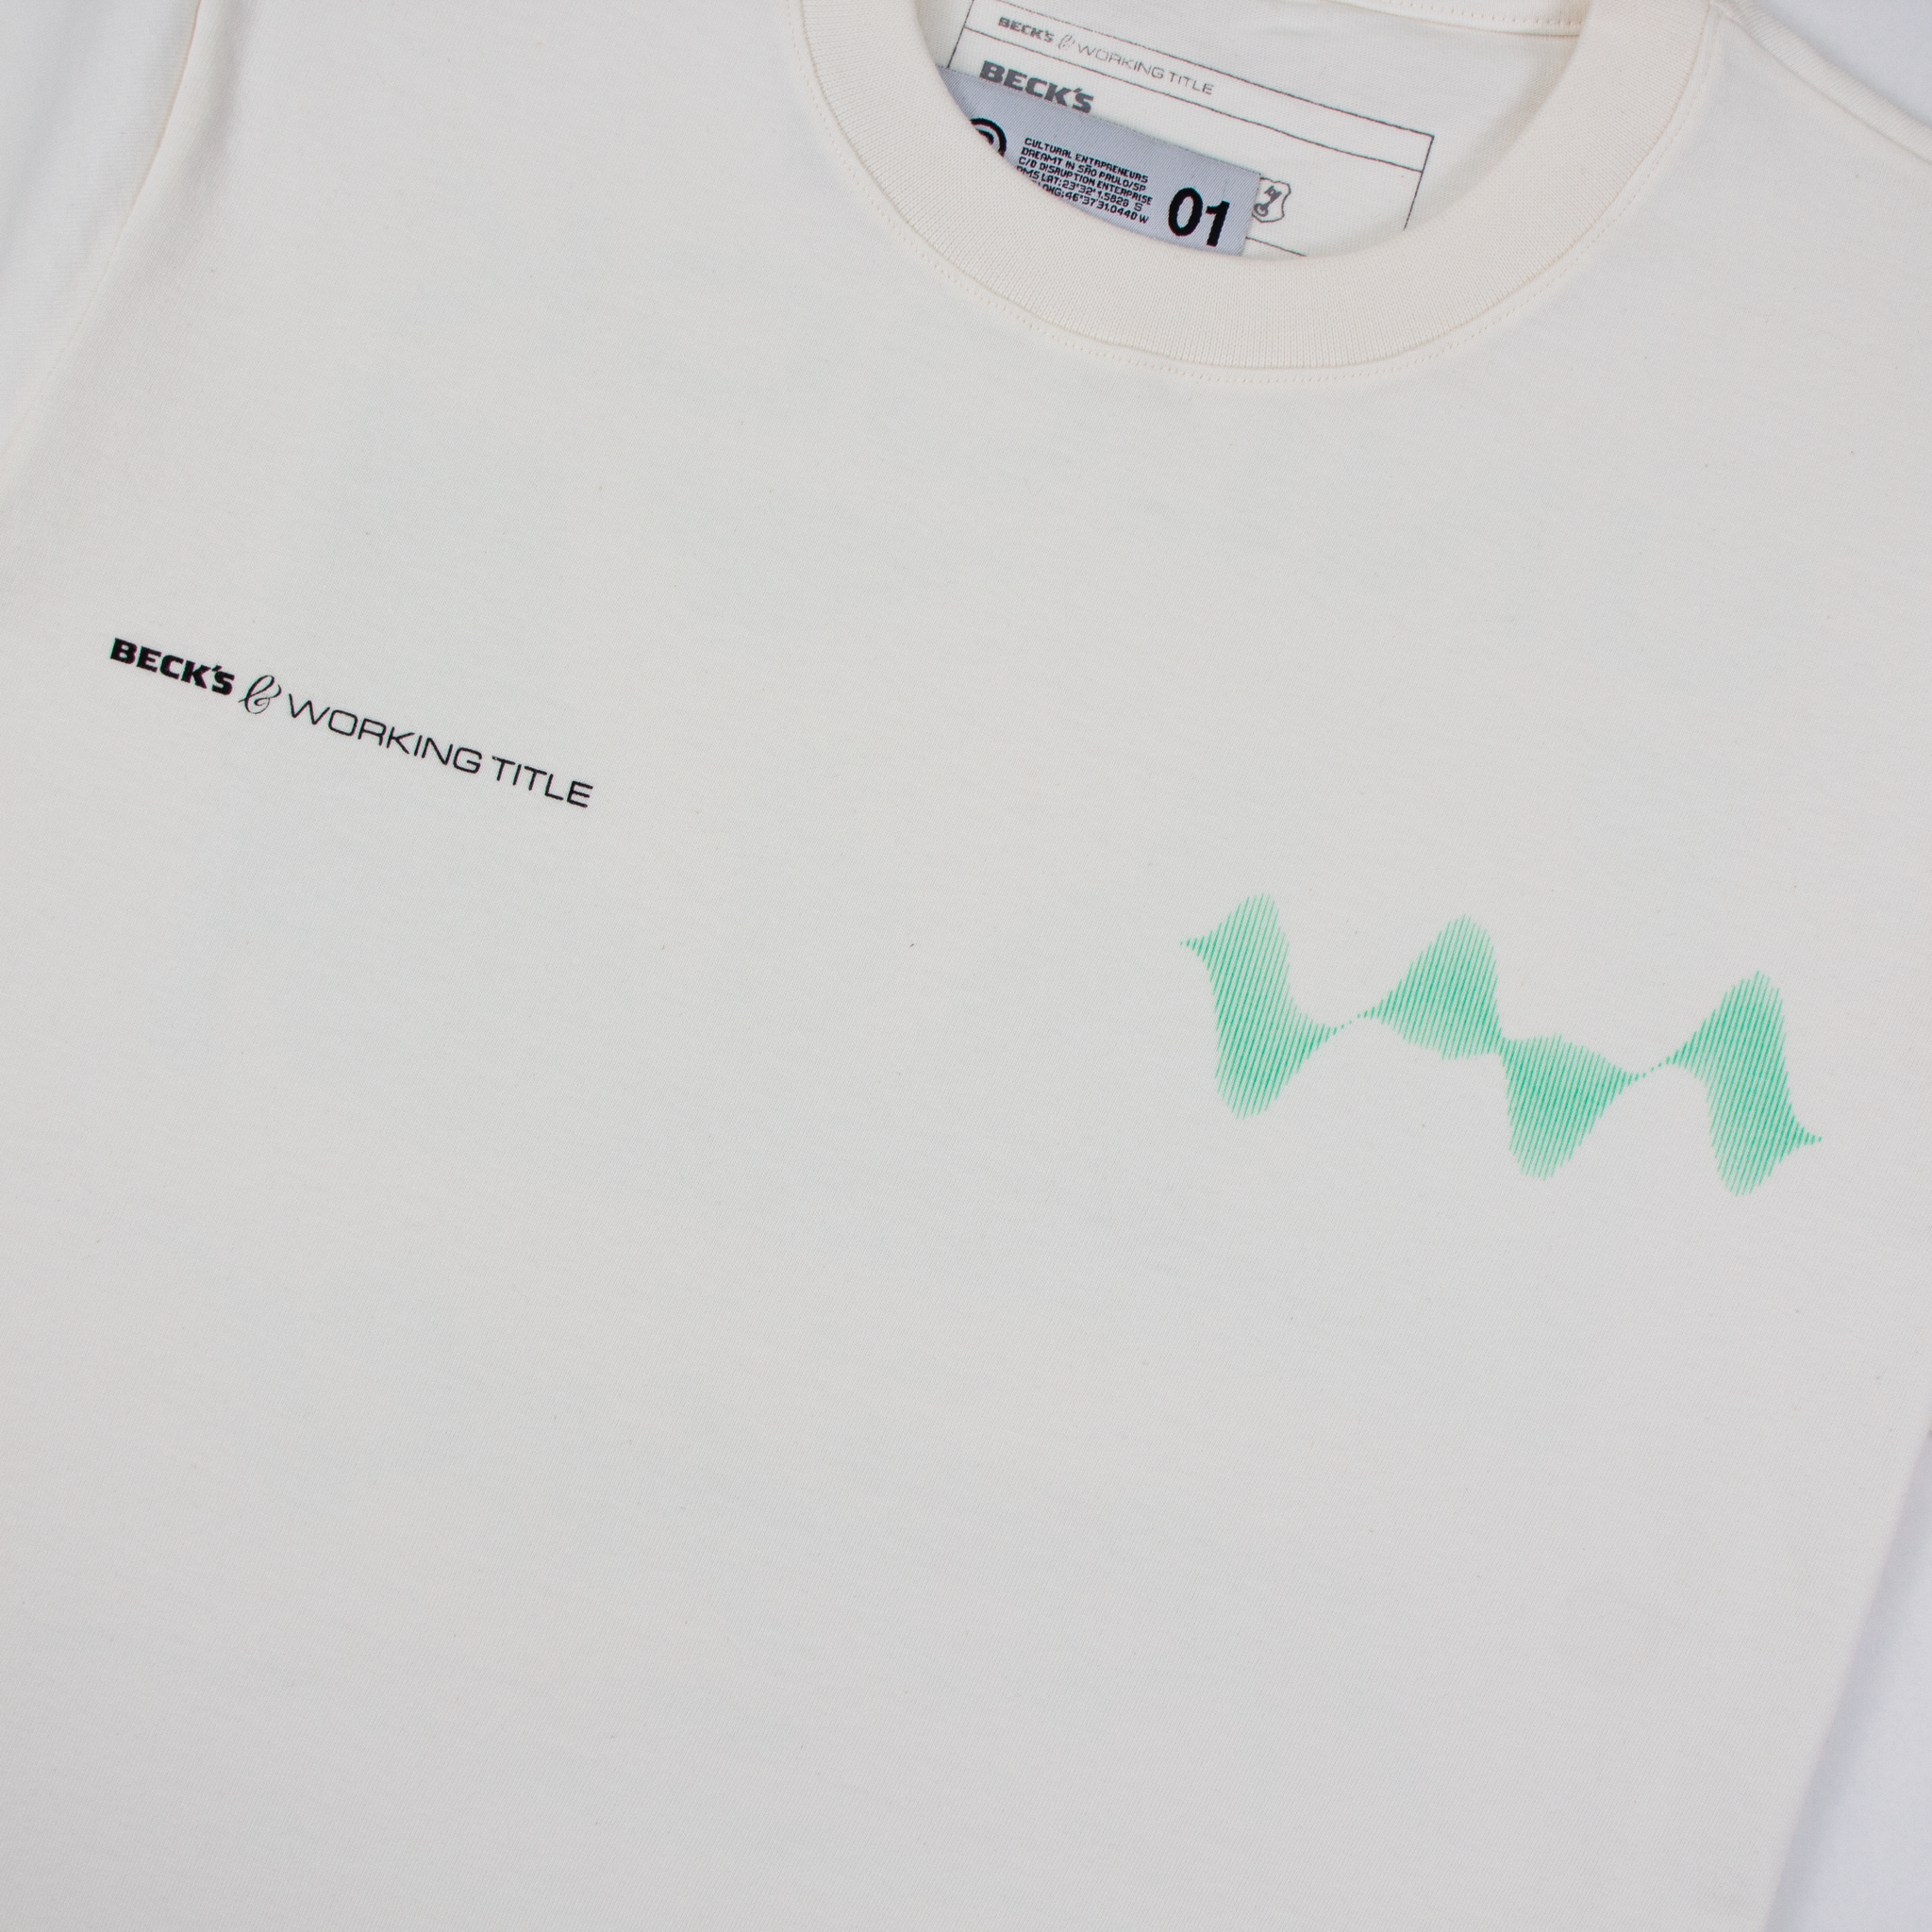 BECK'S x WORKING TITLE Camiseta Sound - Off White